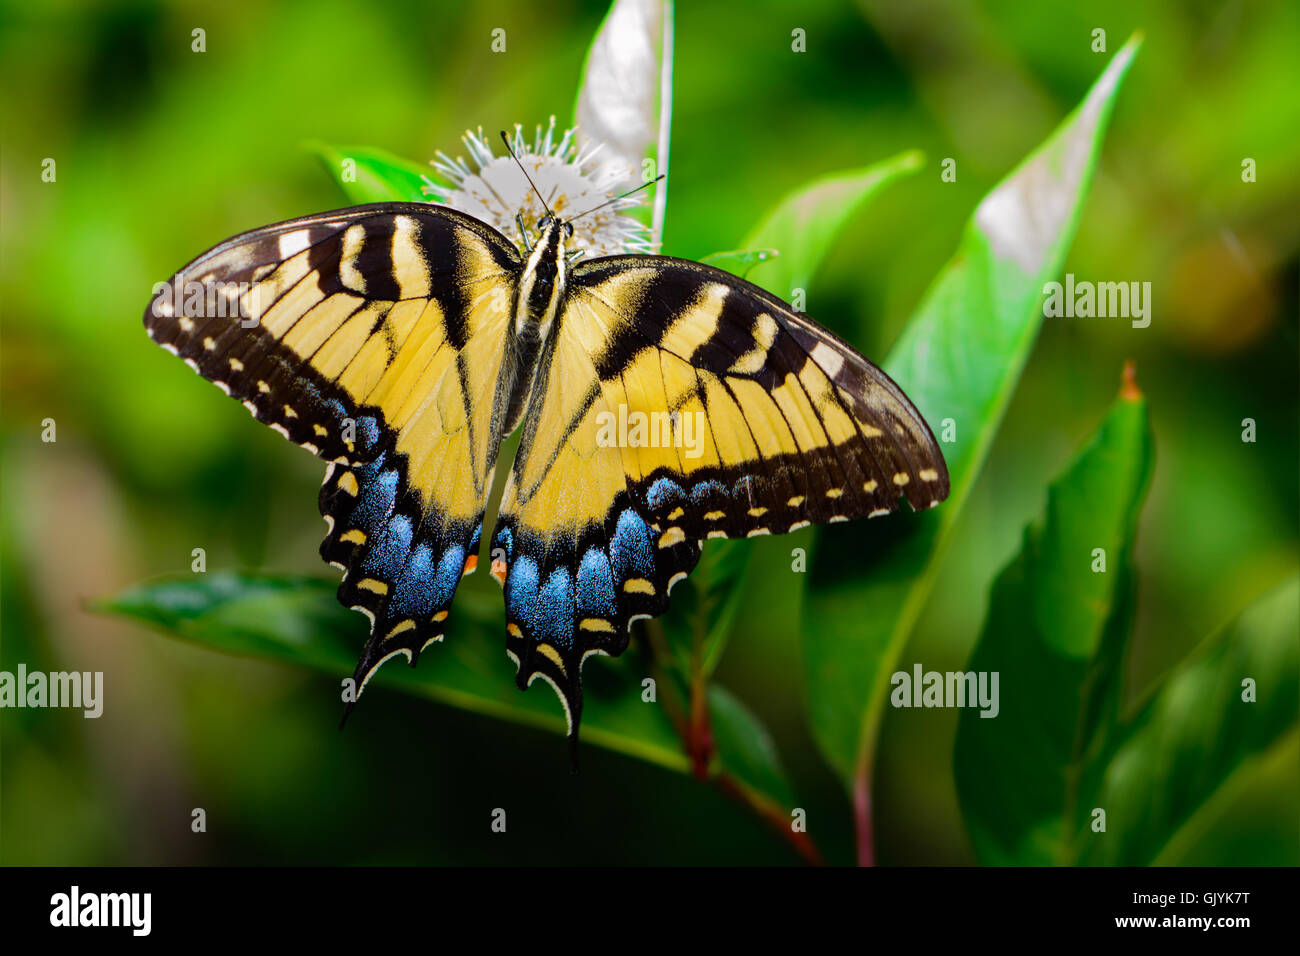 Papilio glaucus mariposa con un intenso azul amarillo y negro. Vista superior Foto de stock